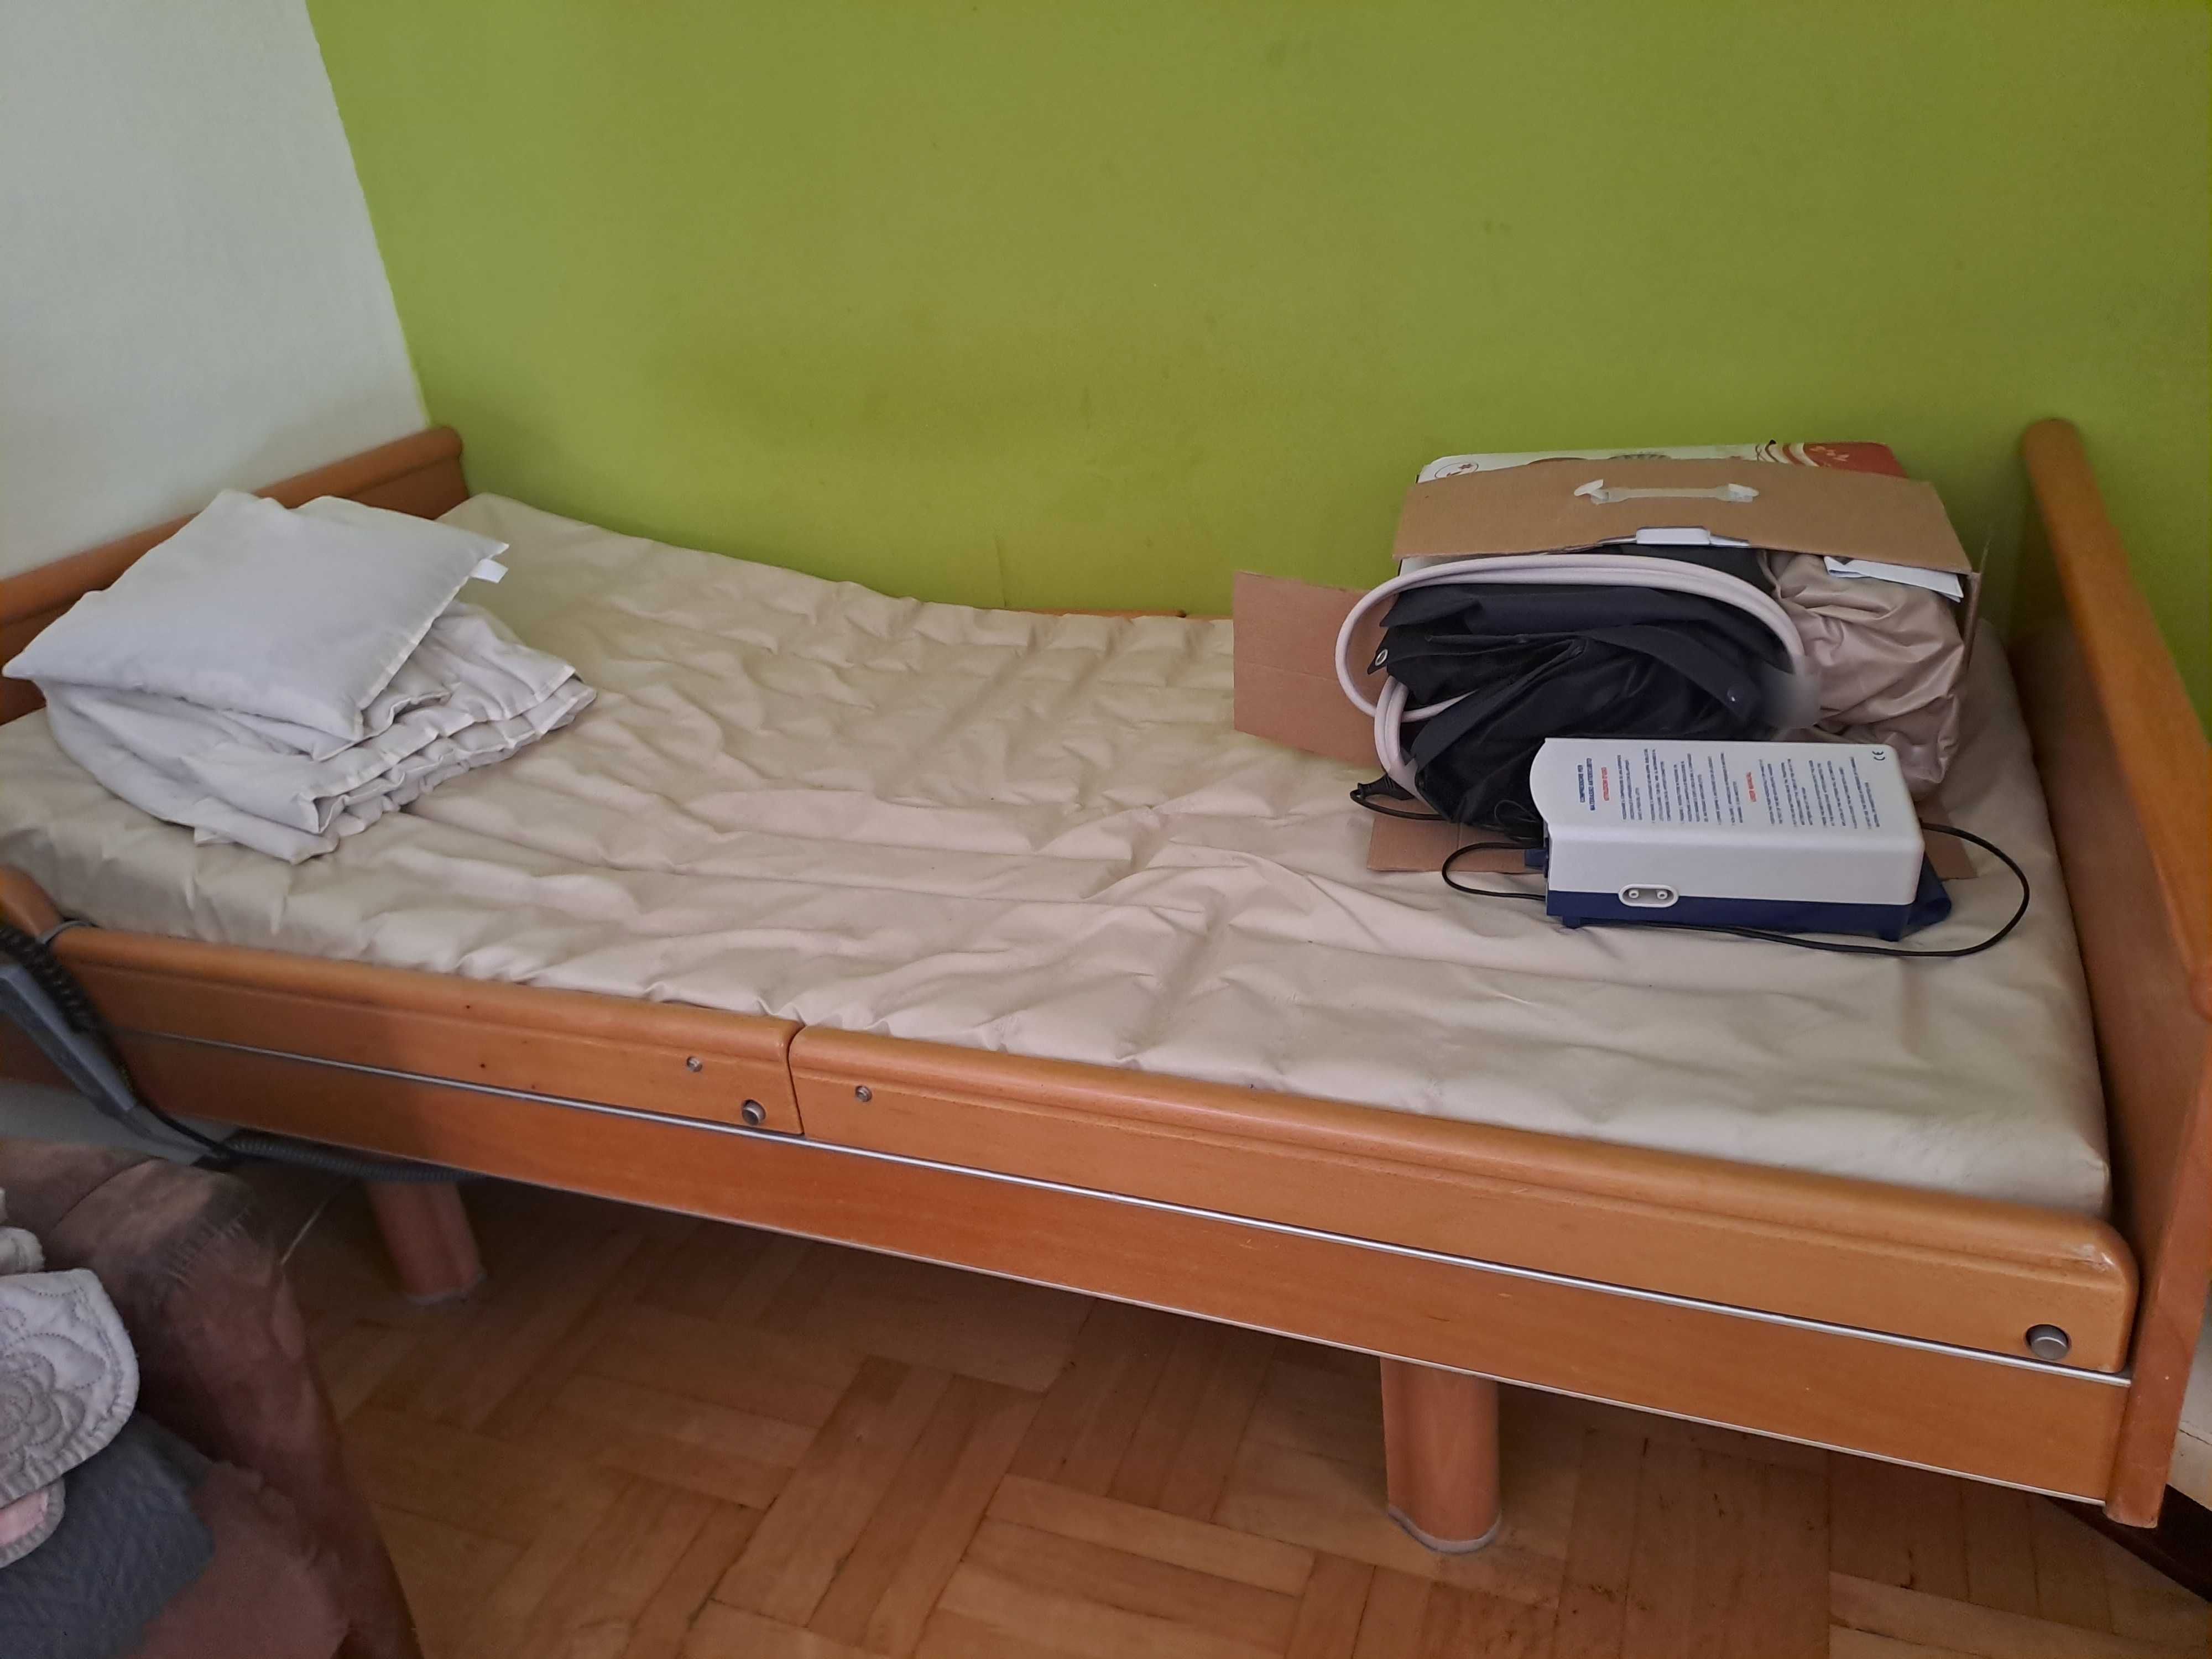 Łóżko rehabilitacyjne+materac